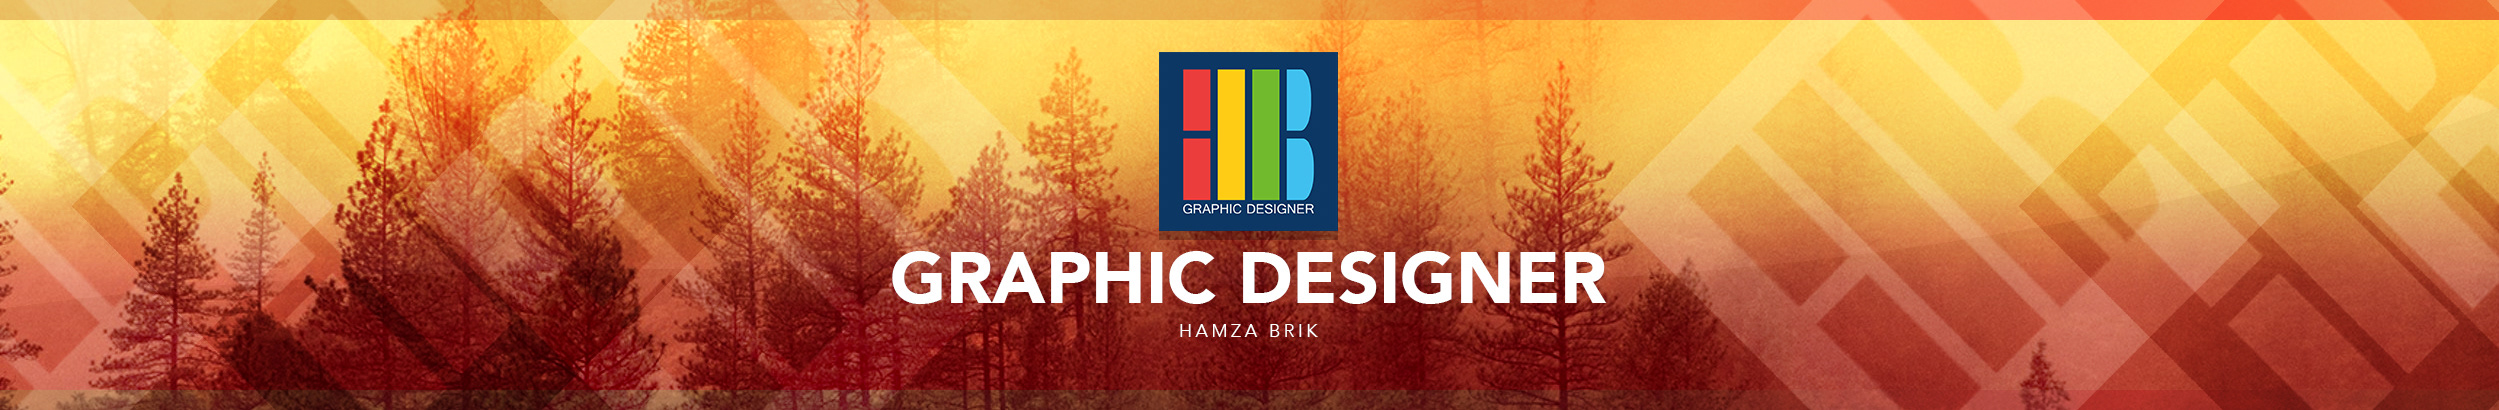 Hamza Brik's profile banner